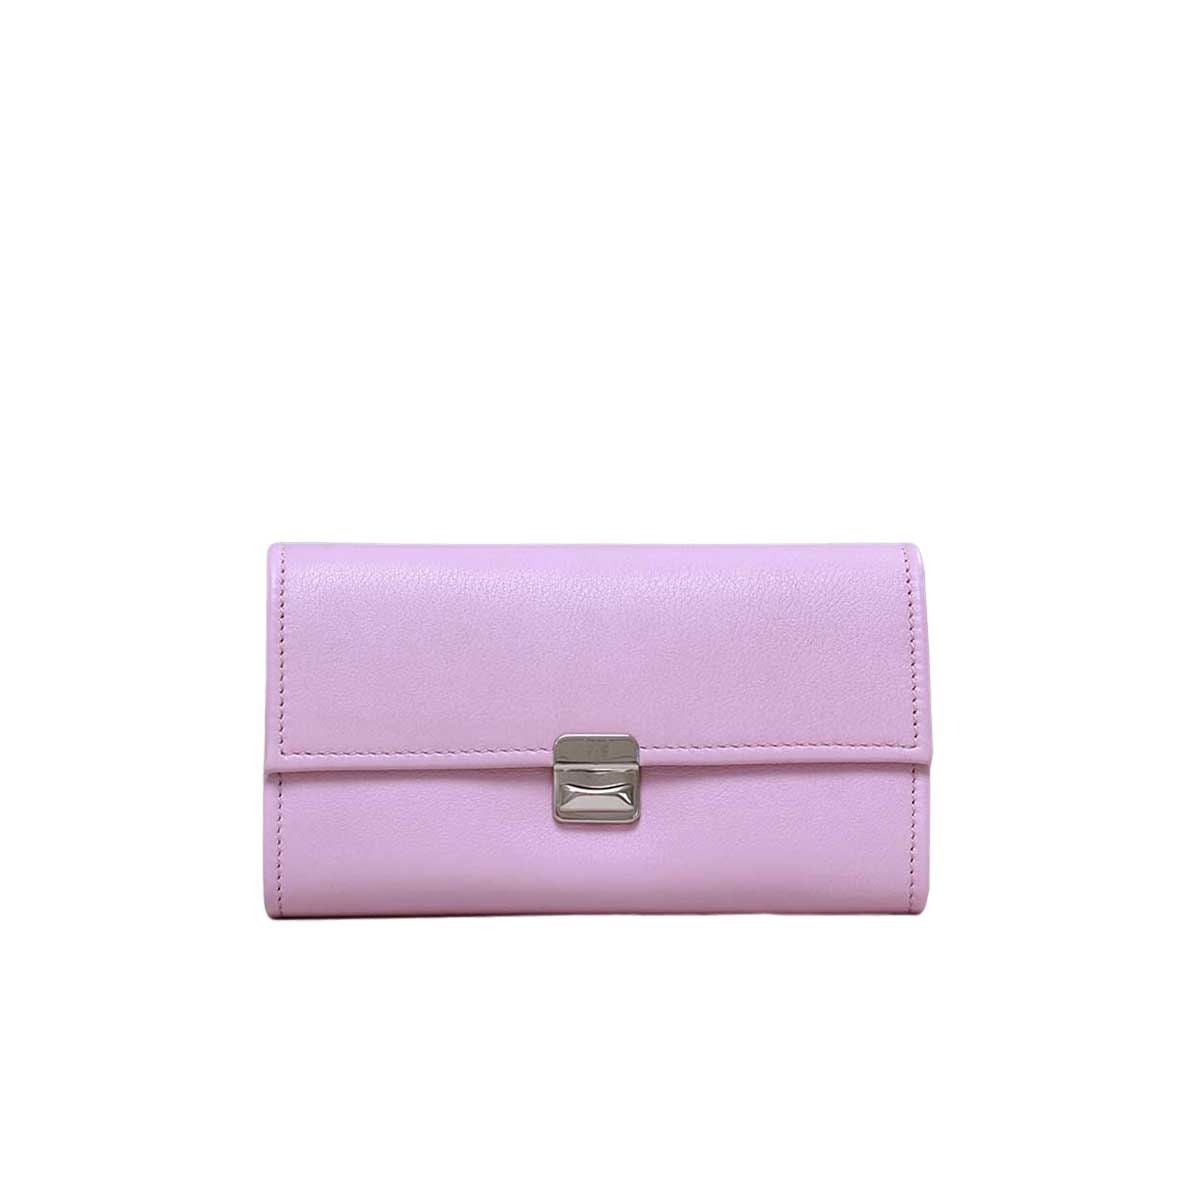 lilac women leather wallet cute wallets for women unique | Etsy